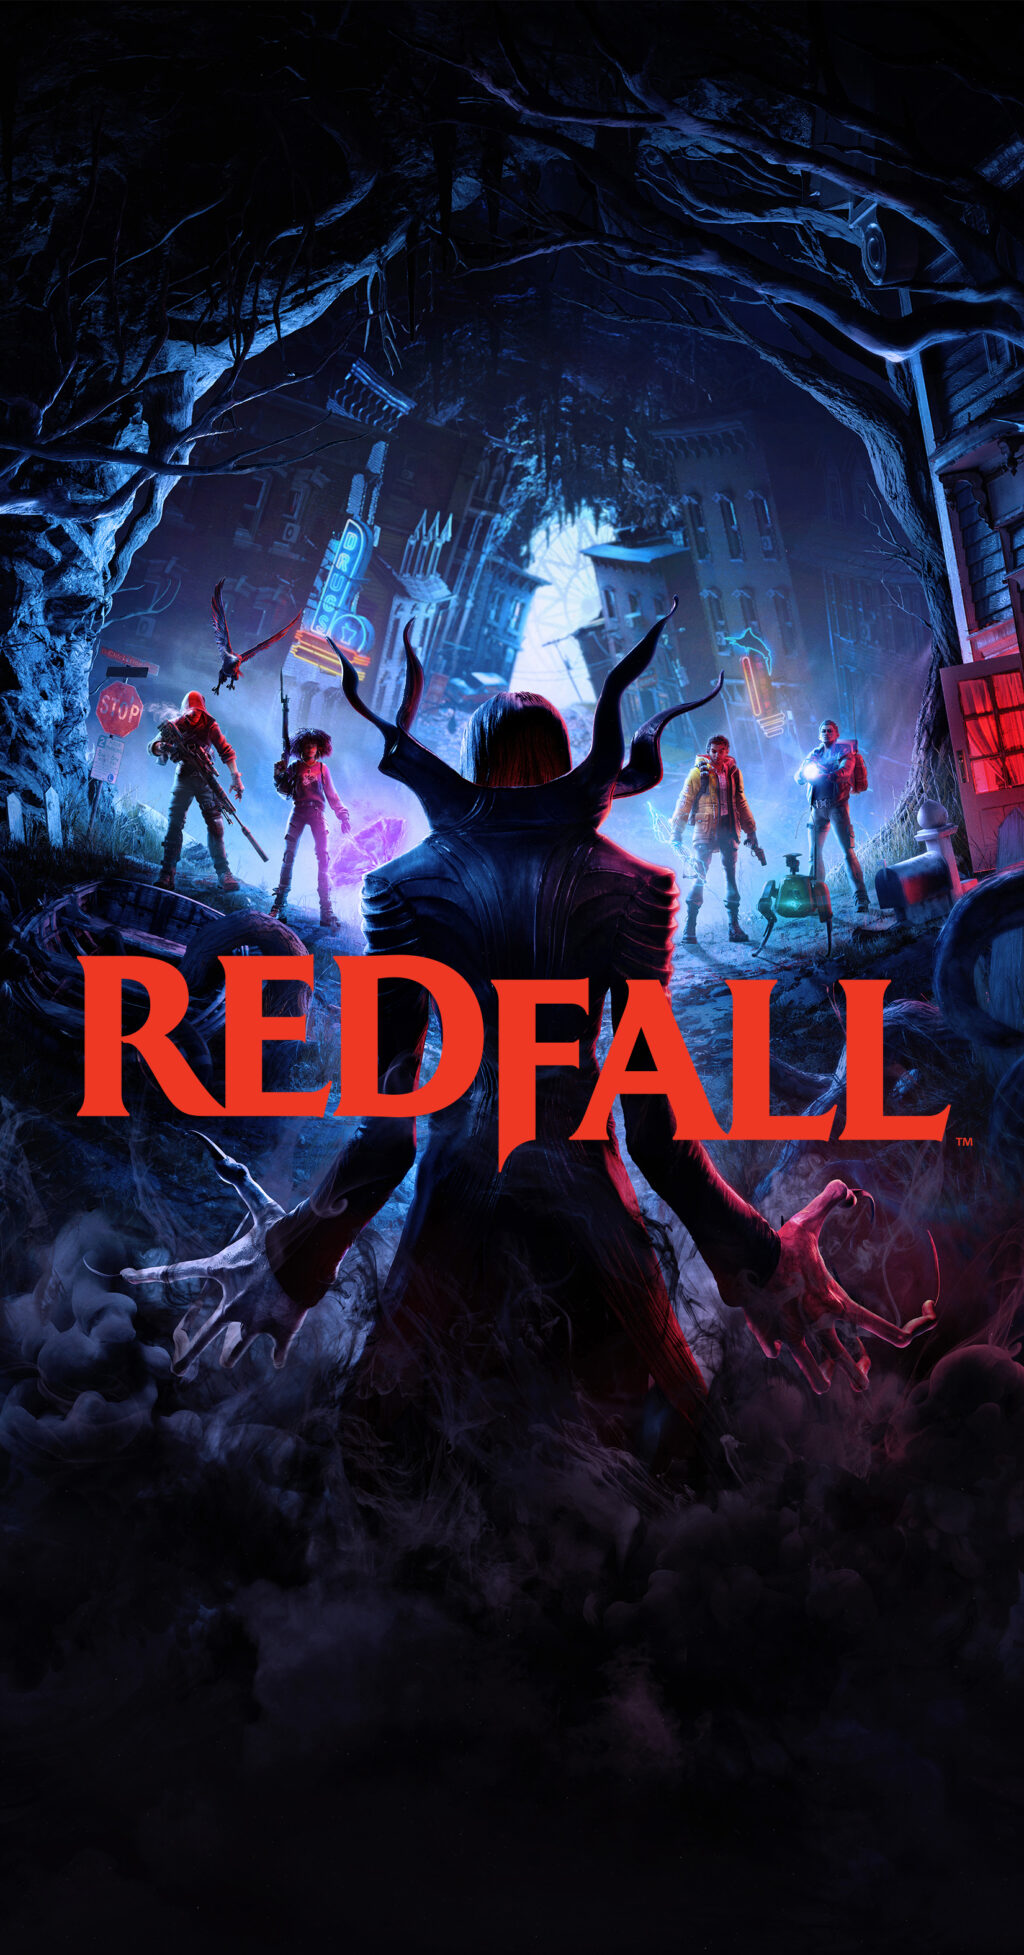 redfall release date pc